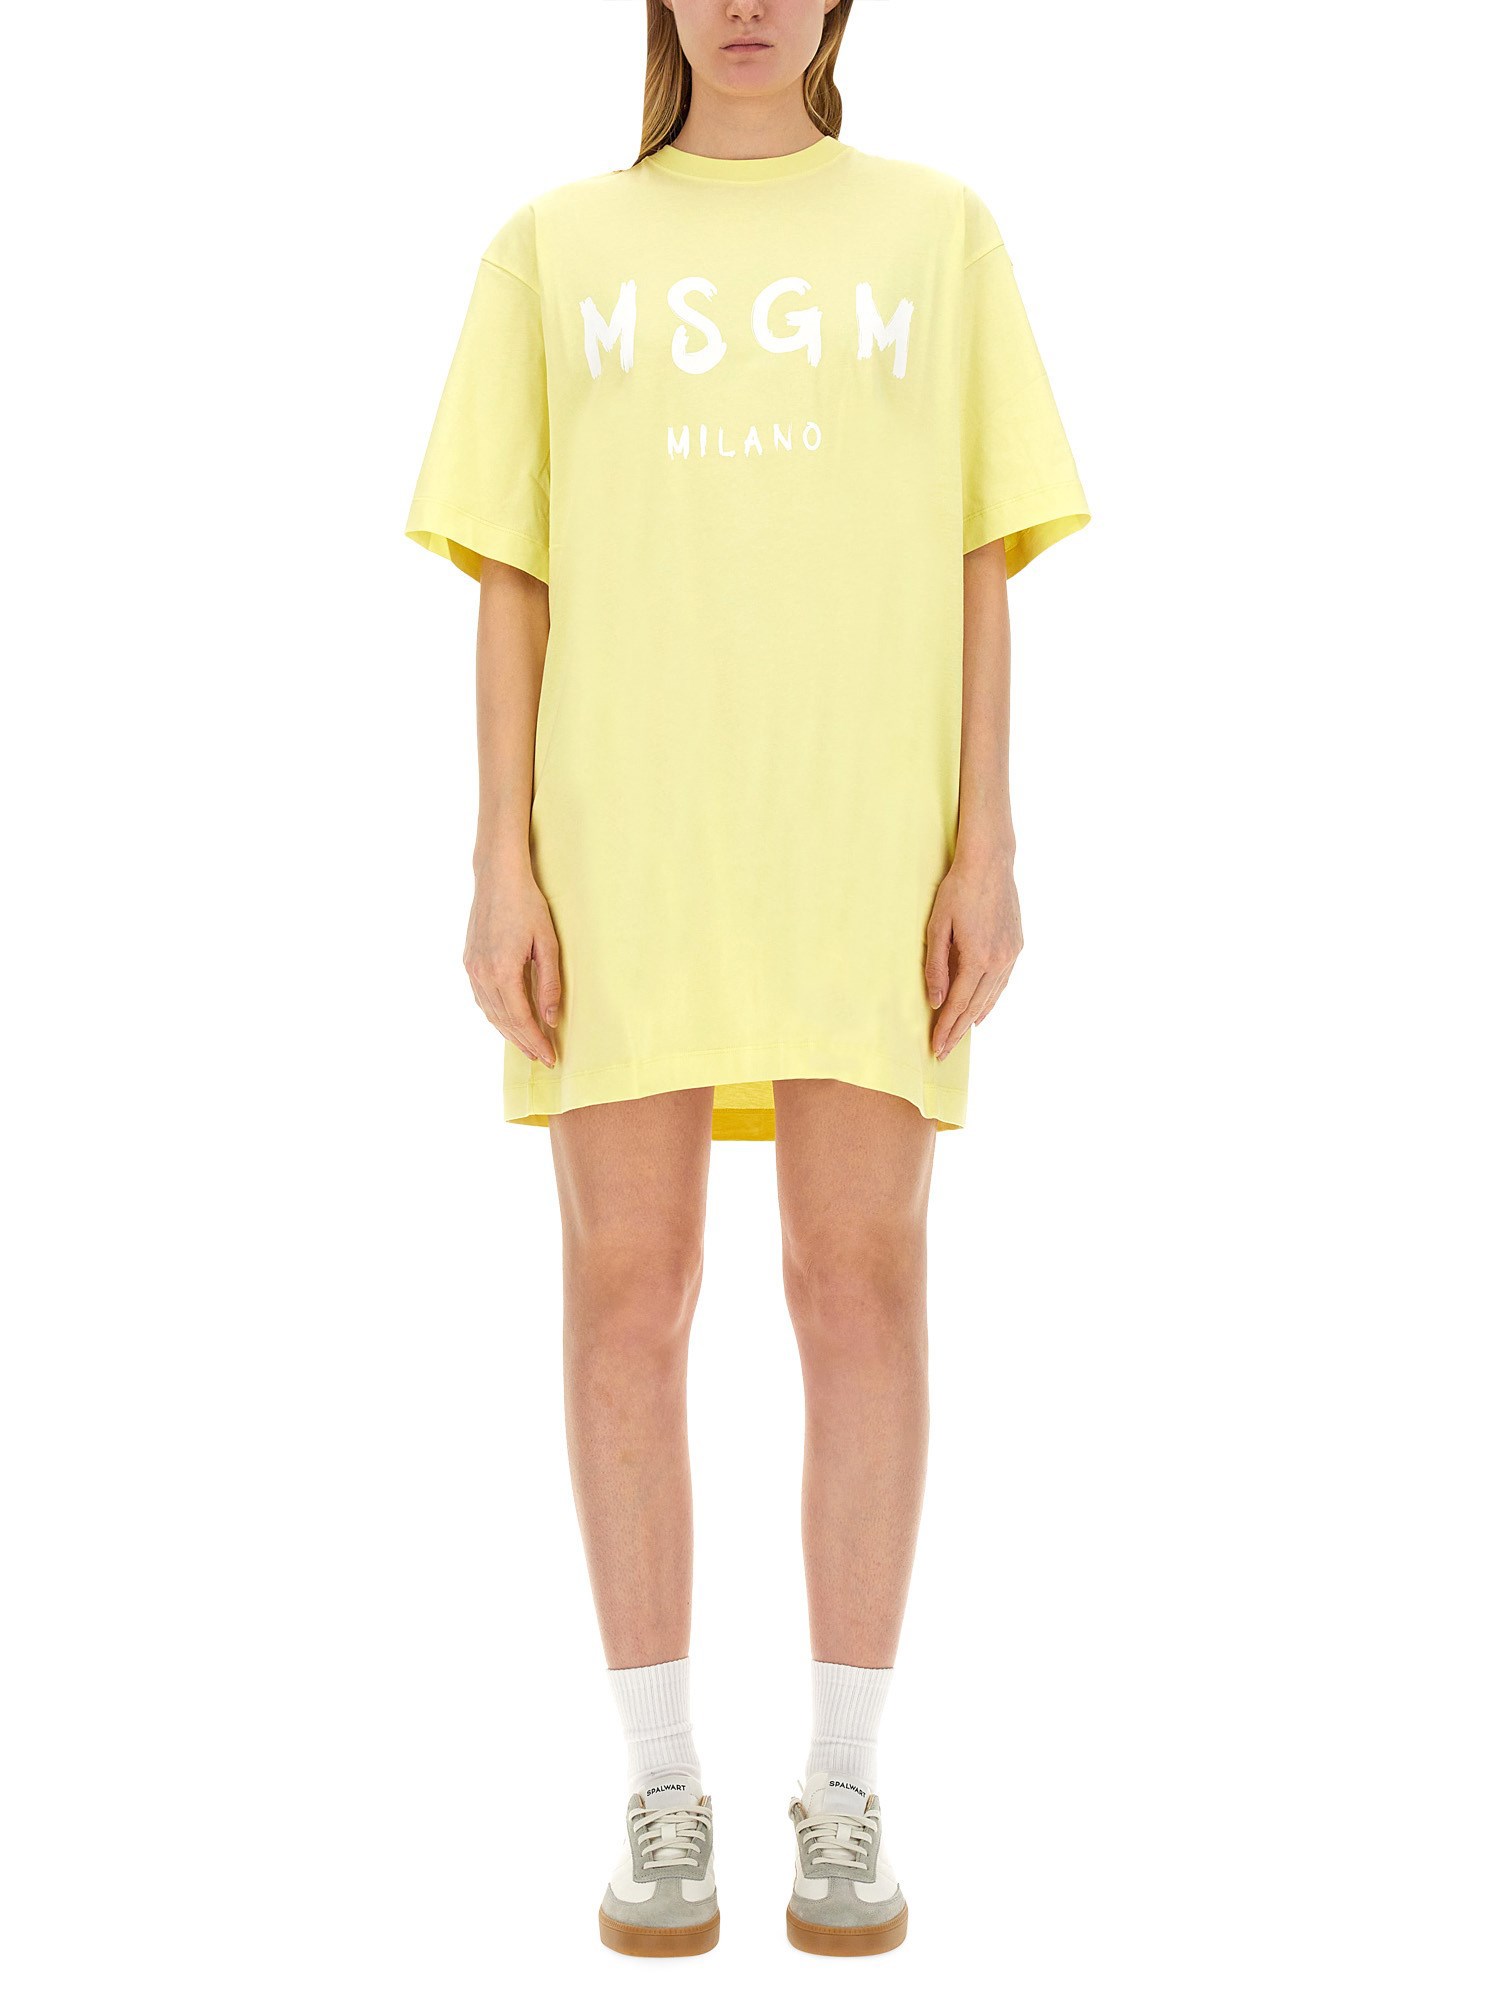 msgm t-shirt dress